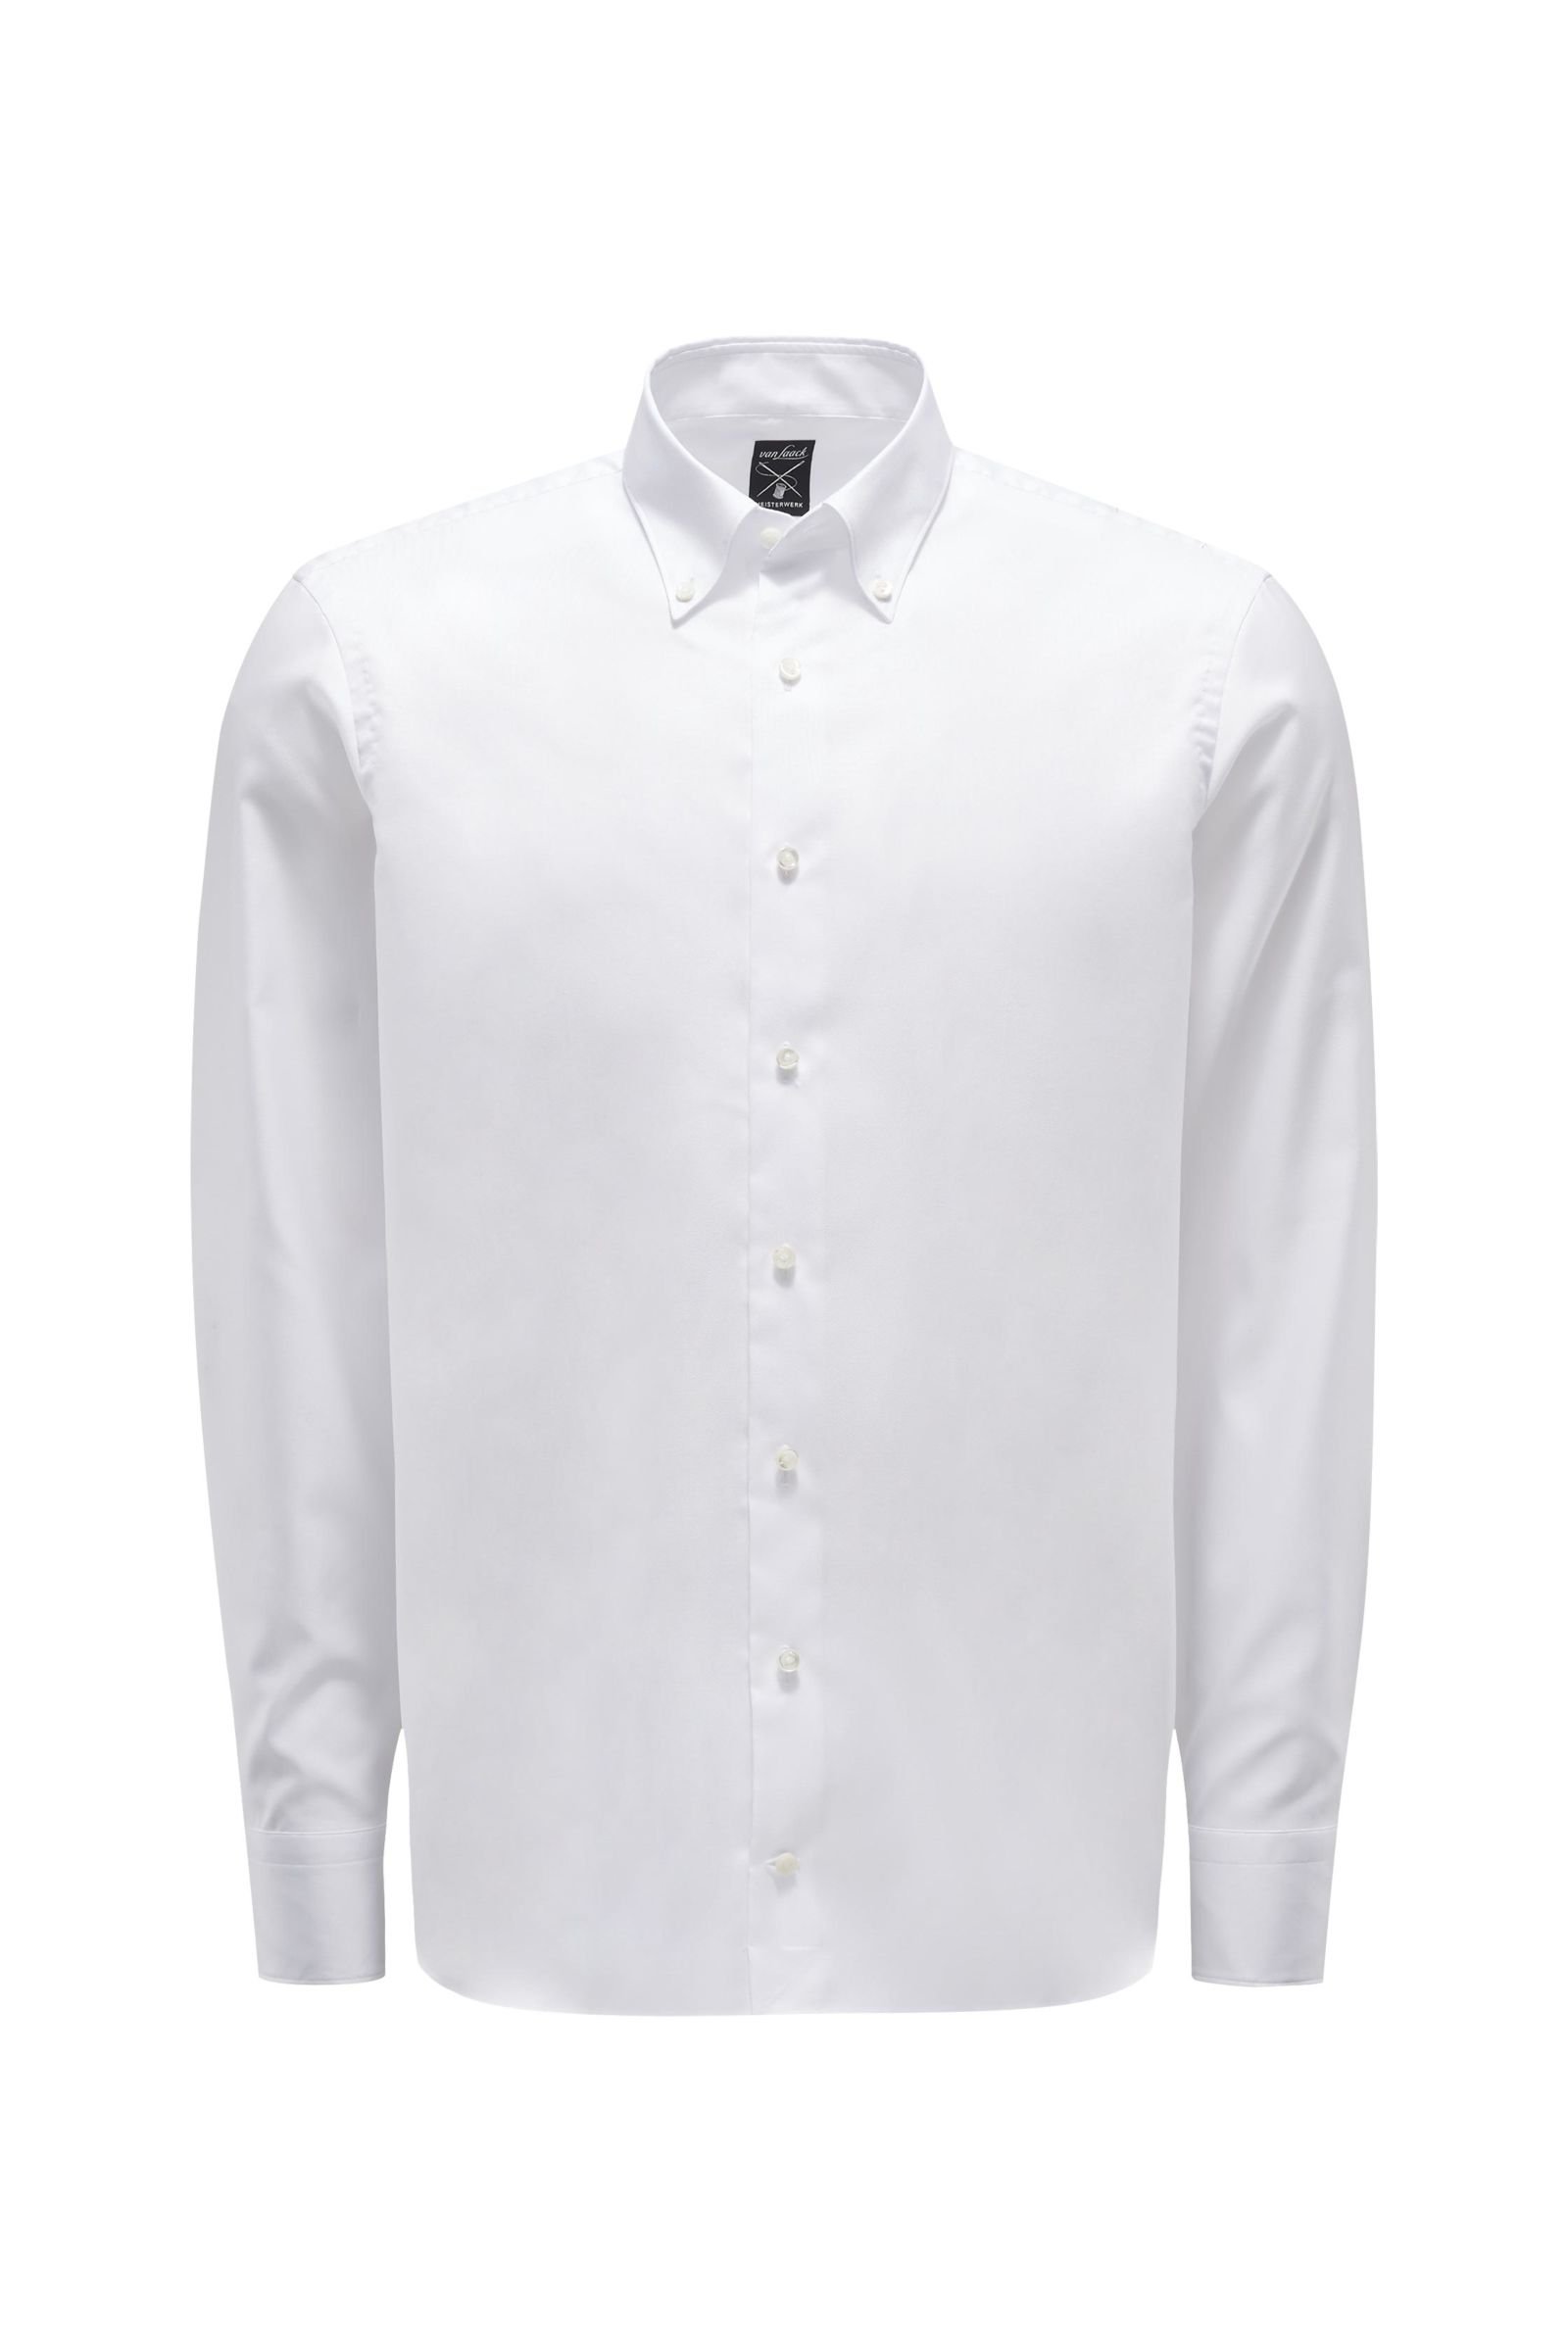 Oxford shirt 'Malin' button-down collar white